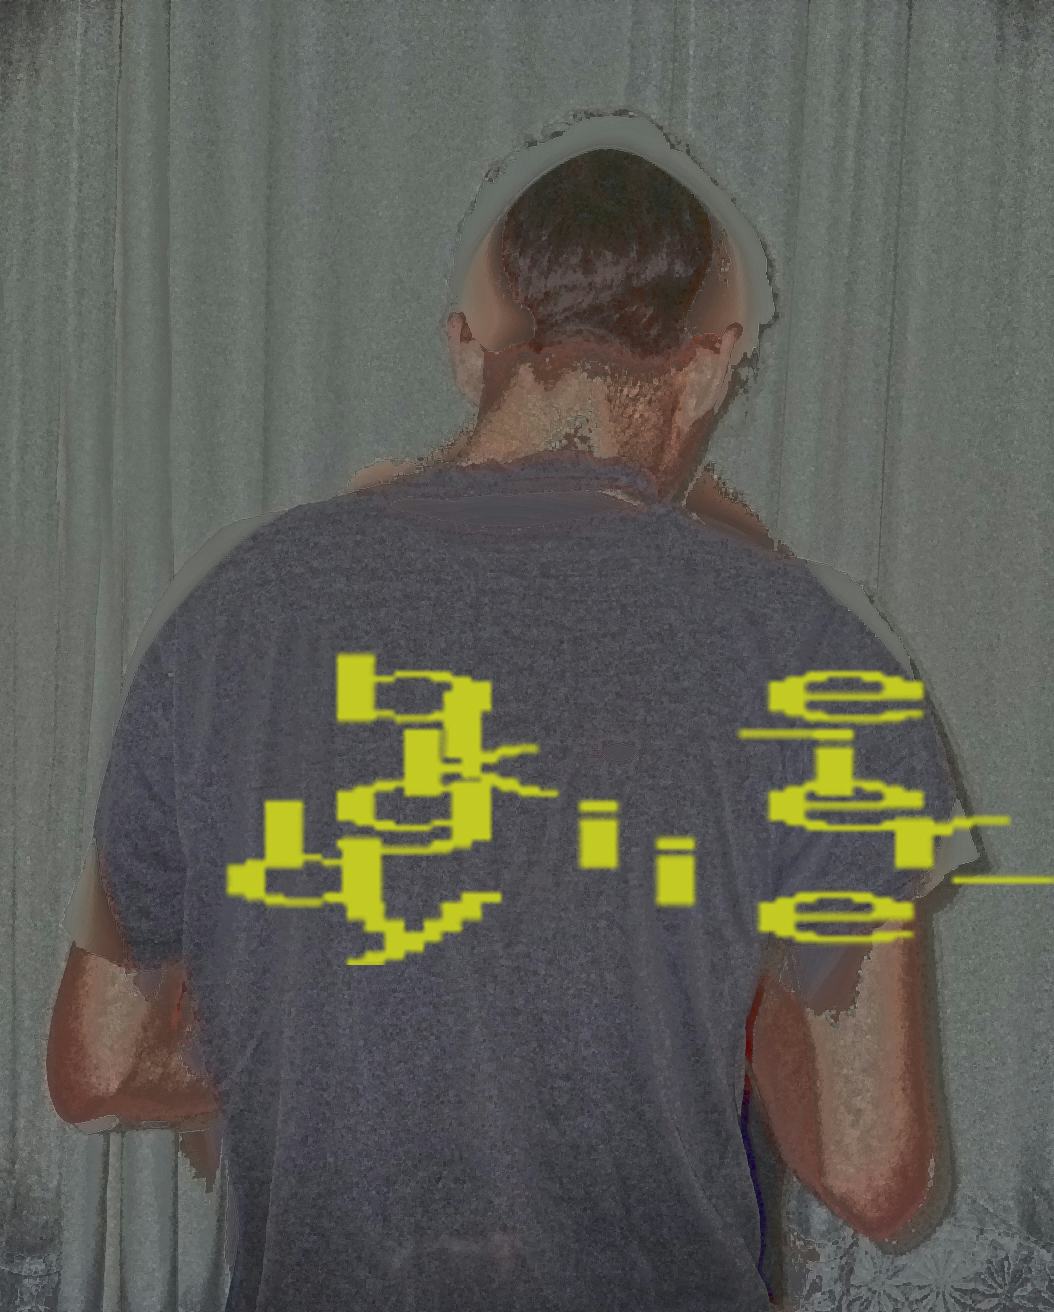 Glitchy image of a man's back, with yellow letters edited on top. ©Kıvılcım S Güngörün